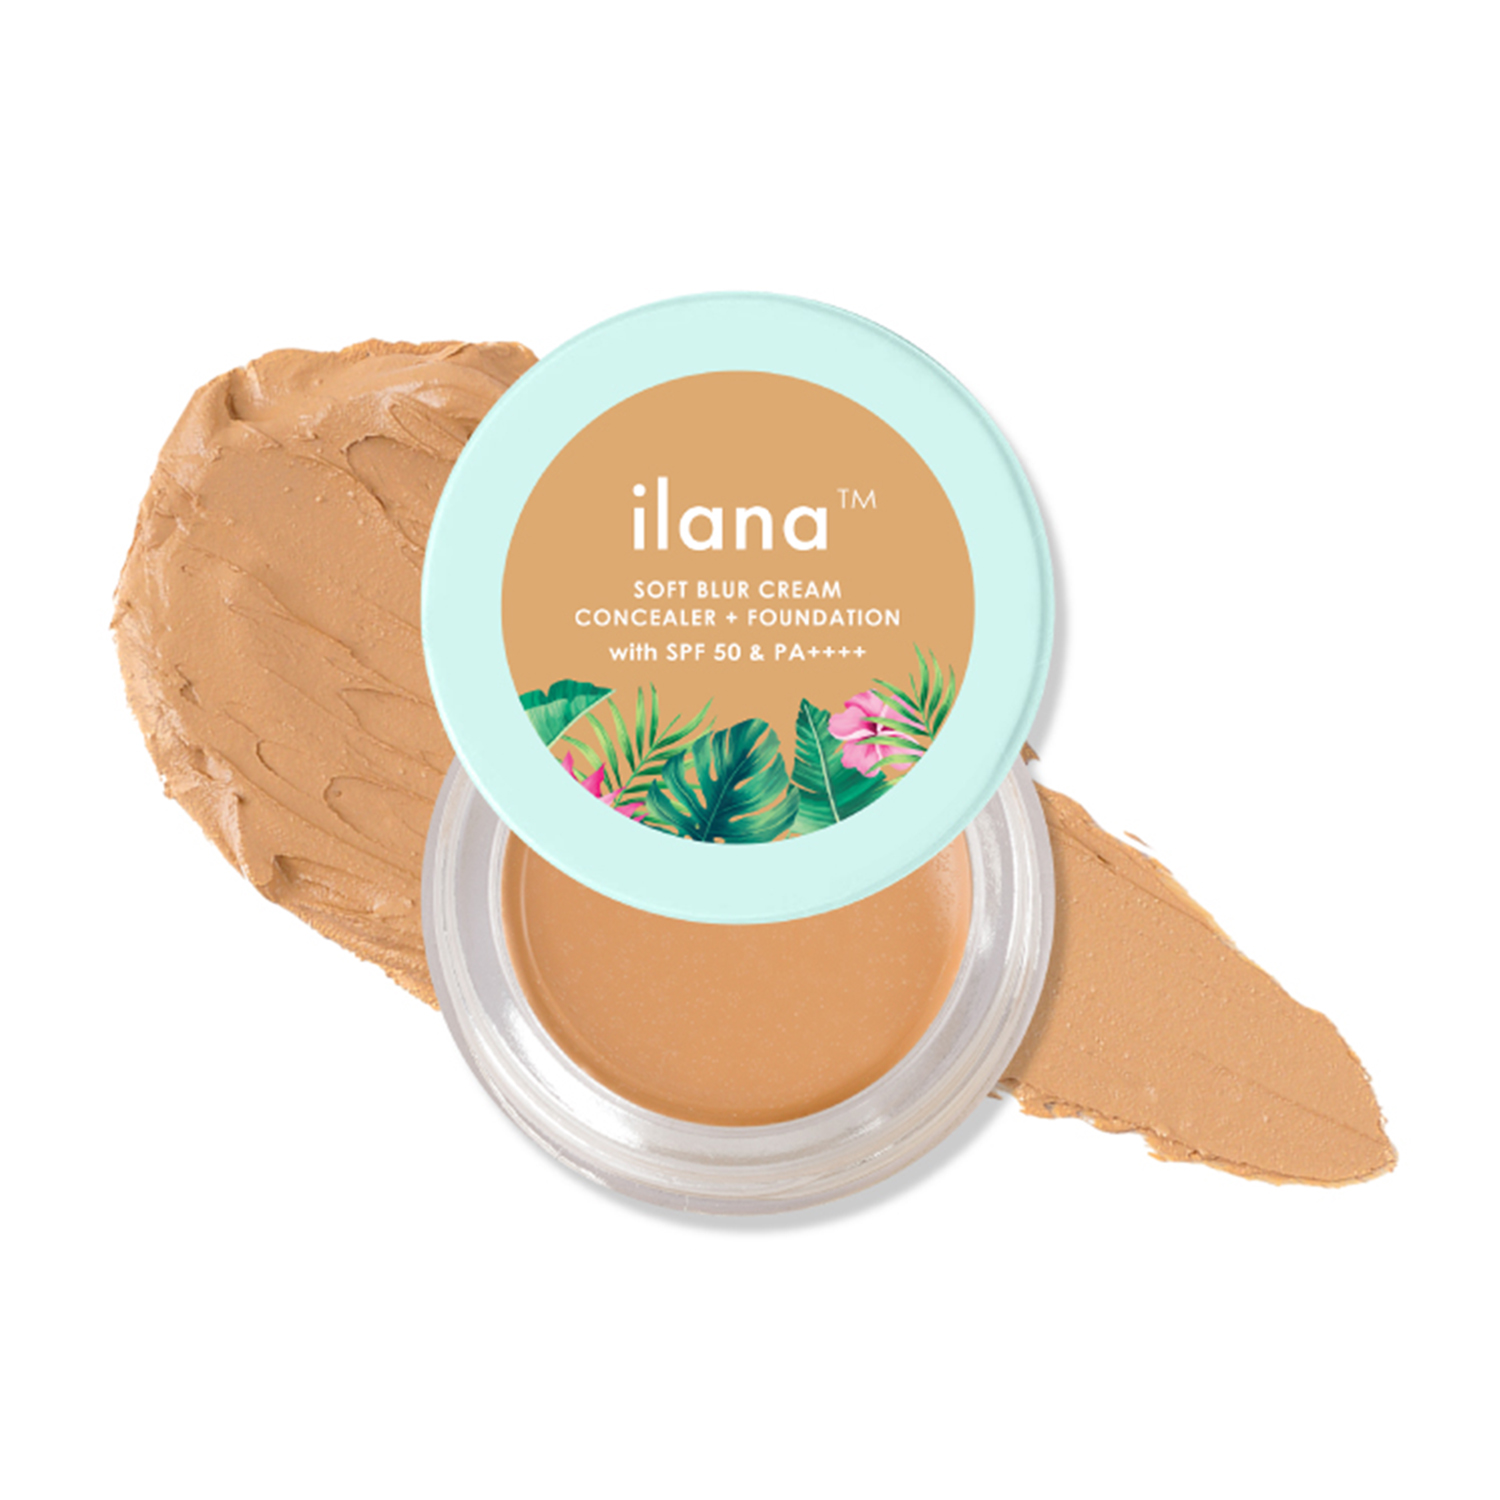 Ilana Soft Blur Cream Concealer & Foundation with SPF 50, 5gm-Pebble